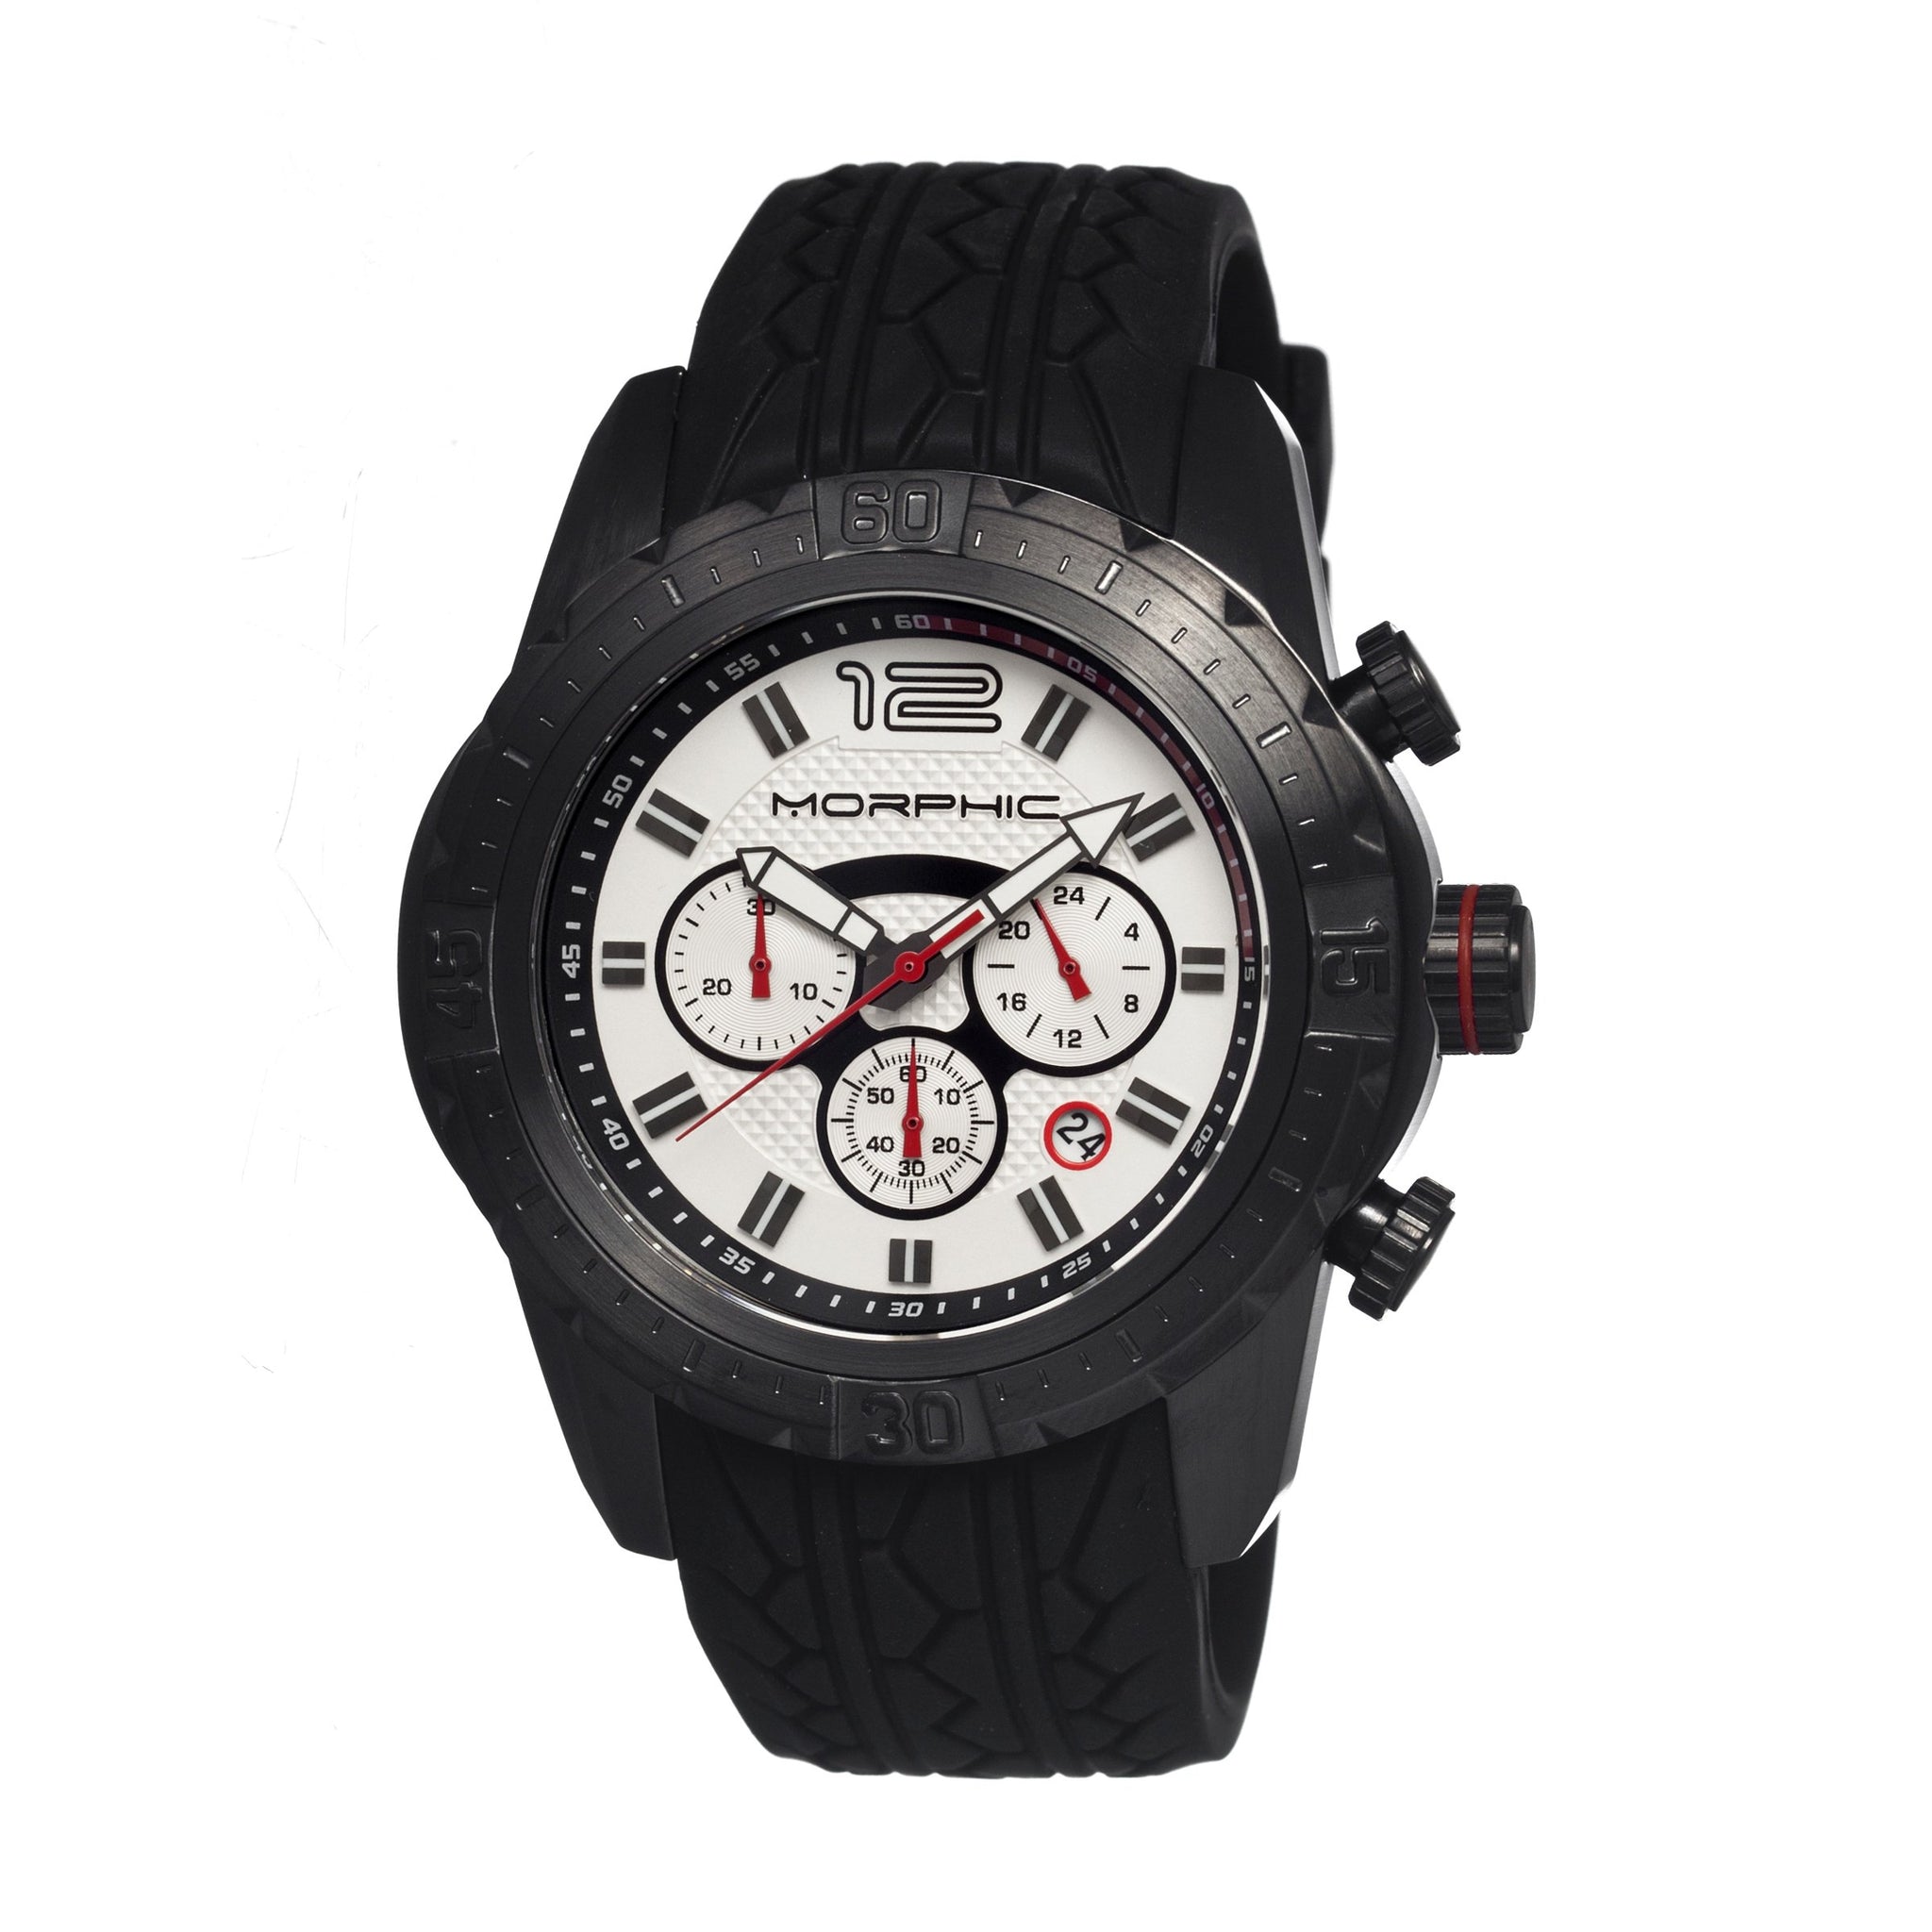 Morphic M27 Series Chronograph Men's Watch w/ Date - Black/White - MPH2704